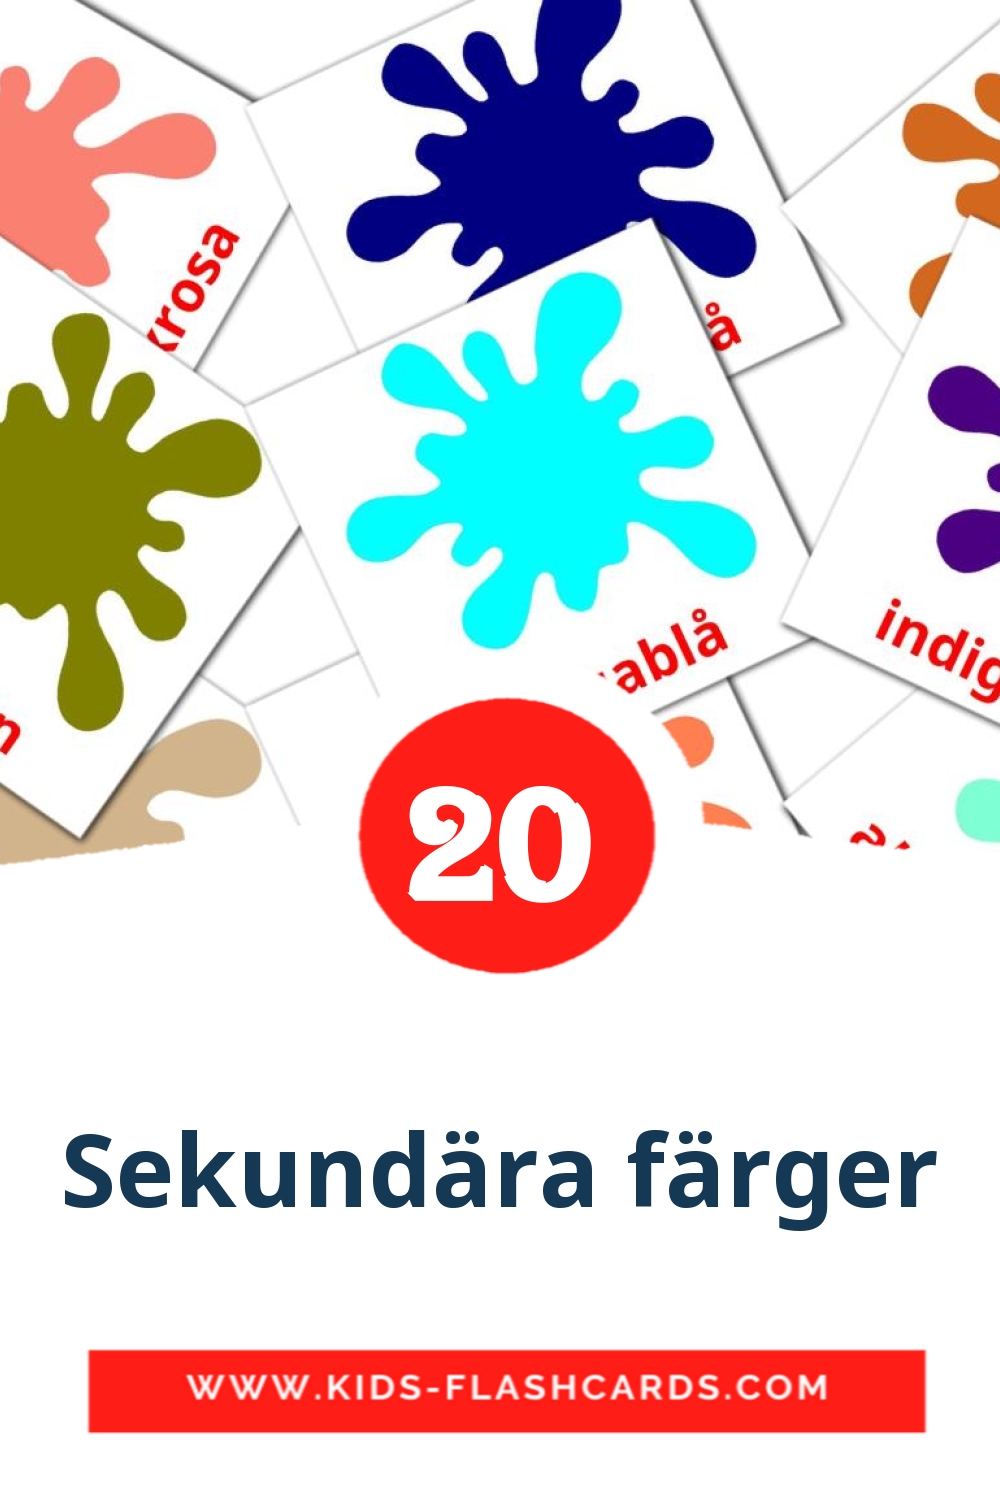 20 carte illustrate di Sekundära färger per la scuola materna in svedese